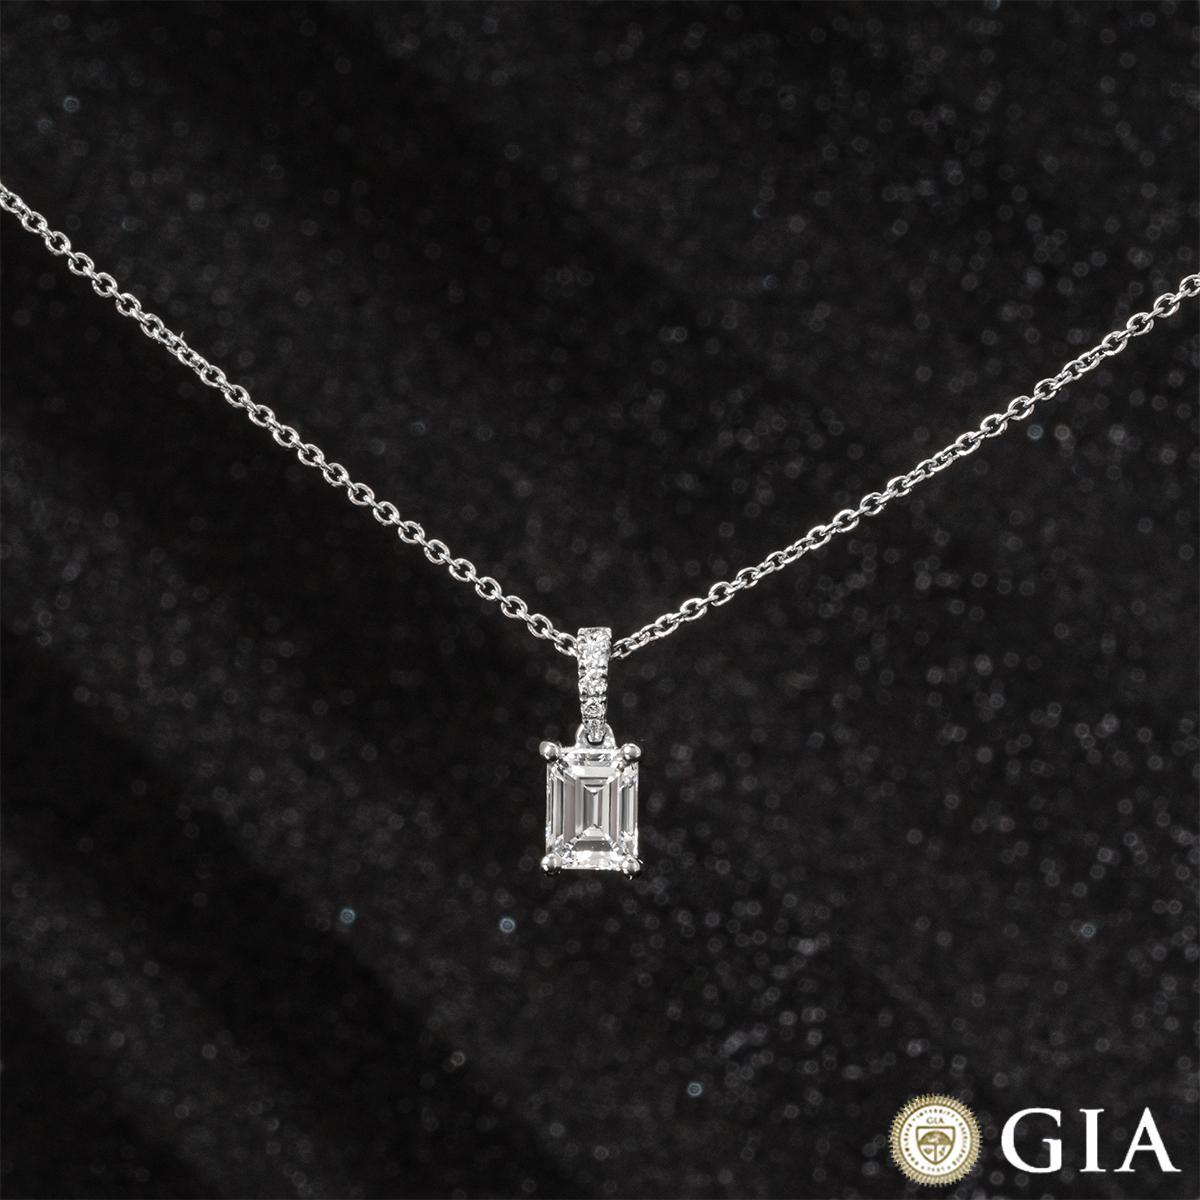 GIA Certified White Gold Emerald Cut Diamond Pendant 0.92 Carat G/SI1 For Sale 3